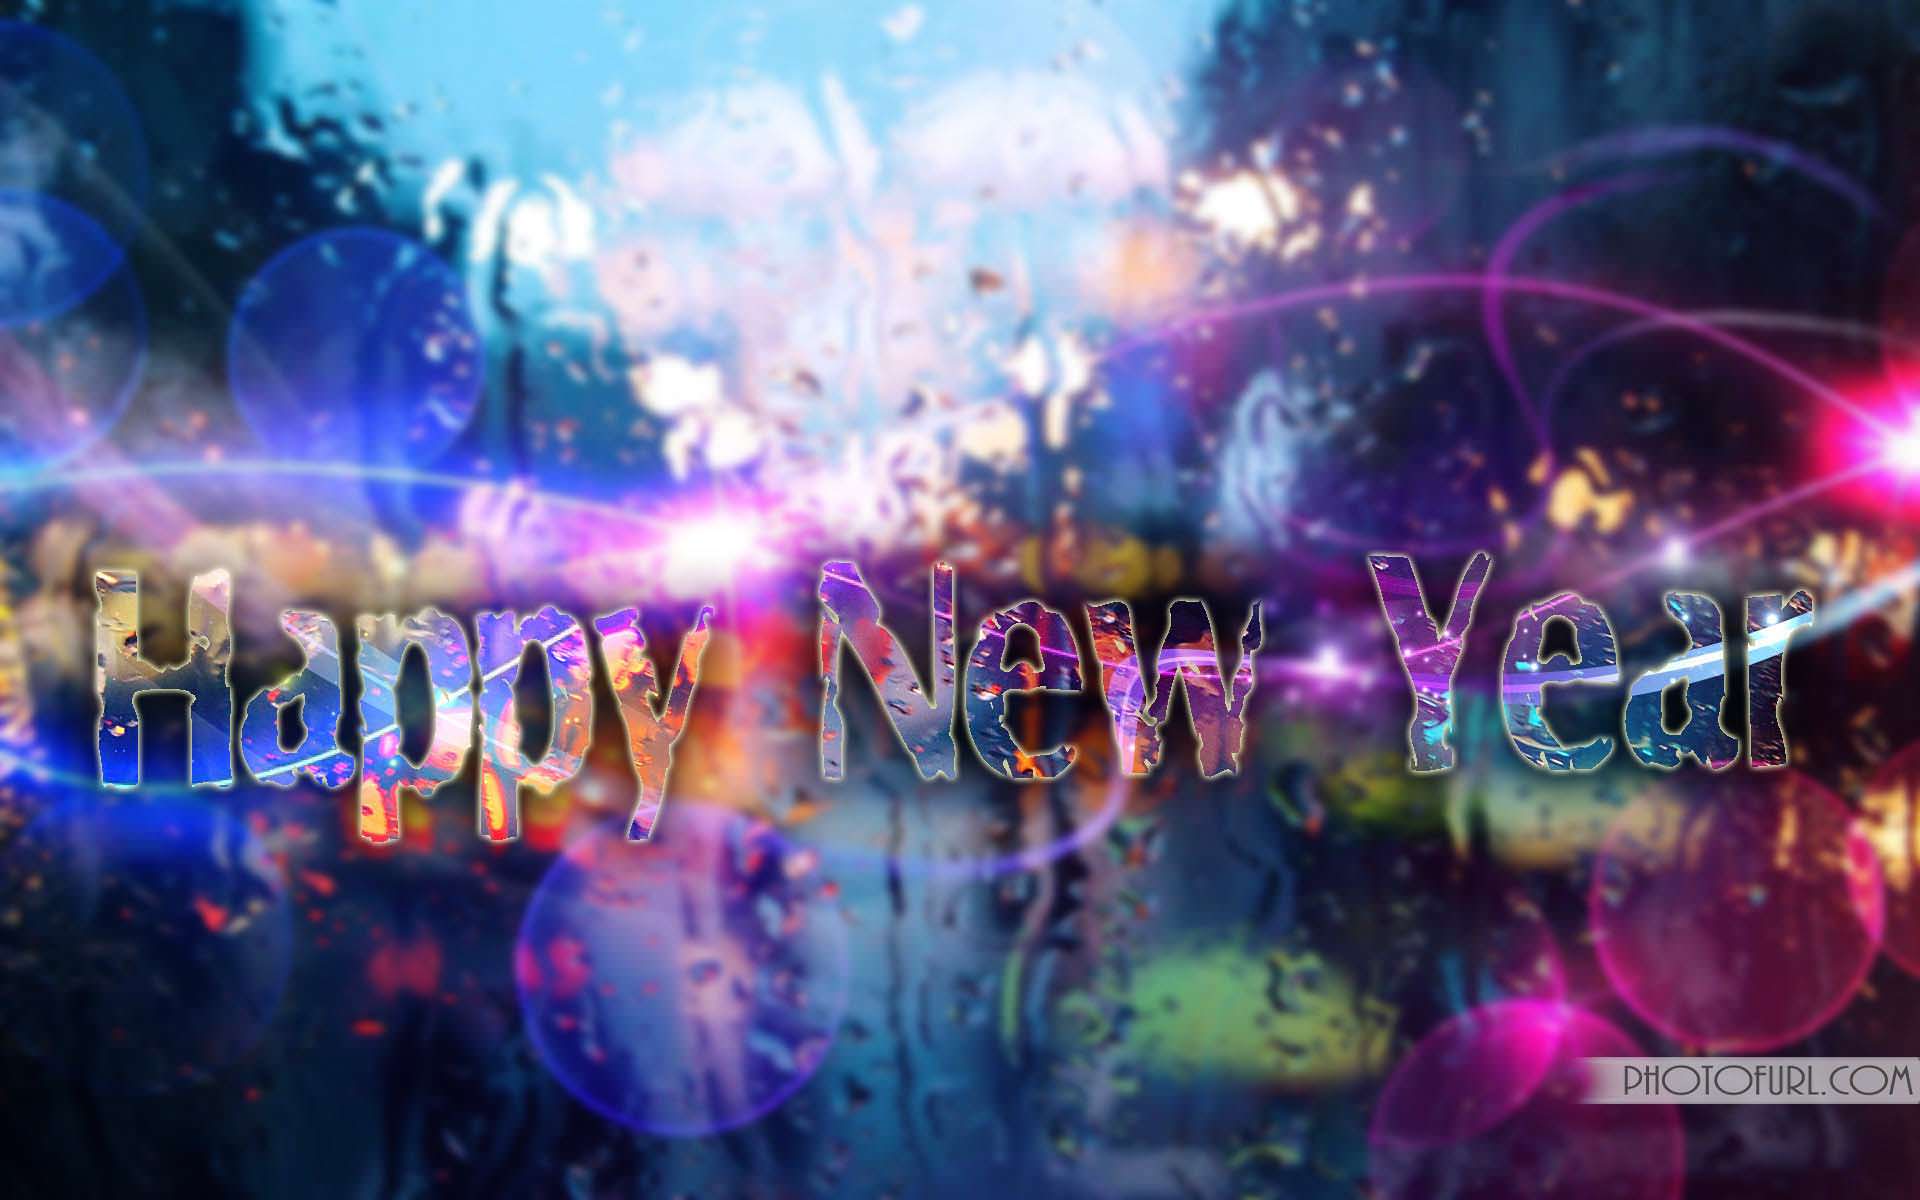 Happy New Year Desktop Image & HD Wallpaper Free Download